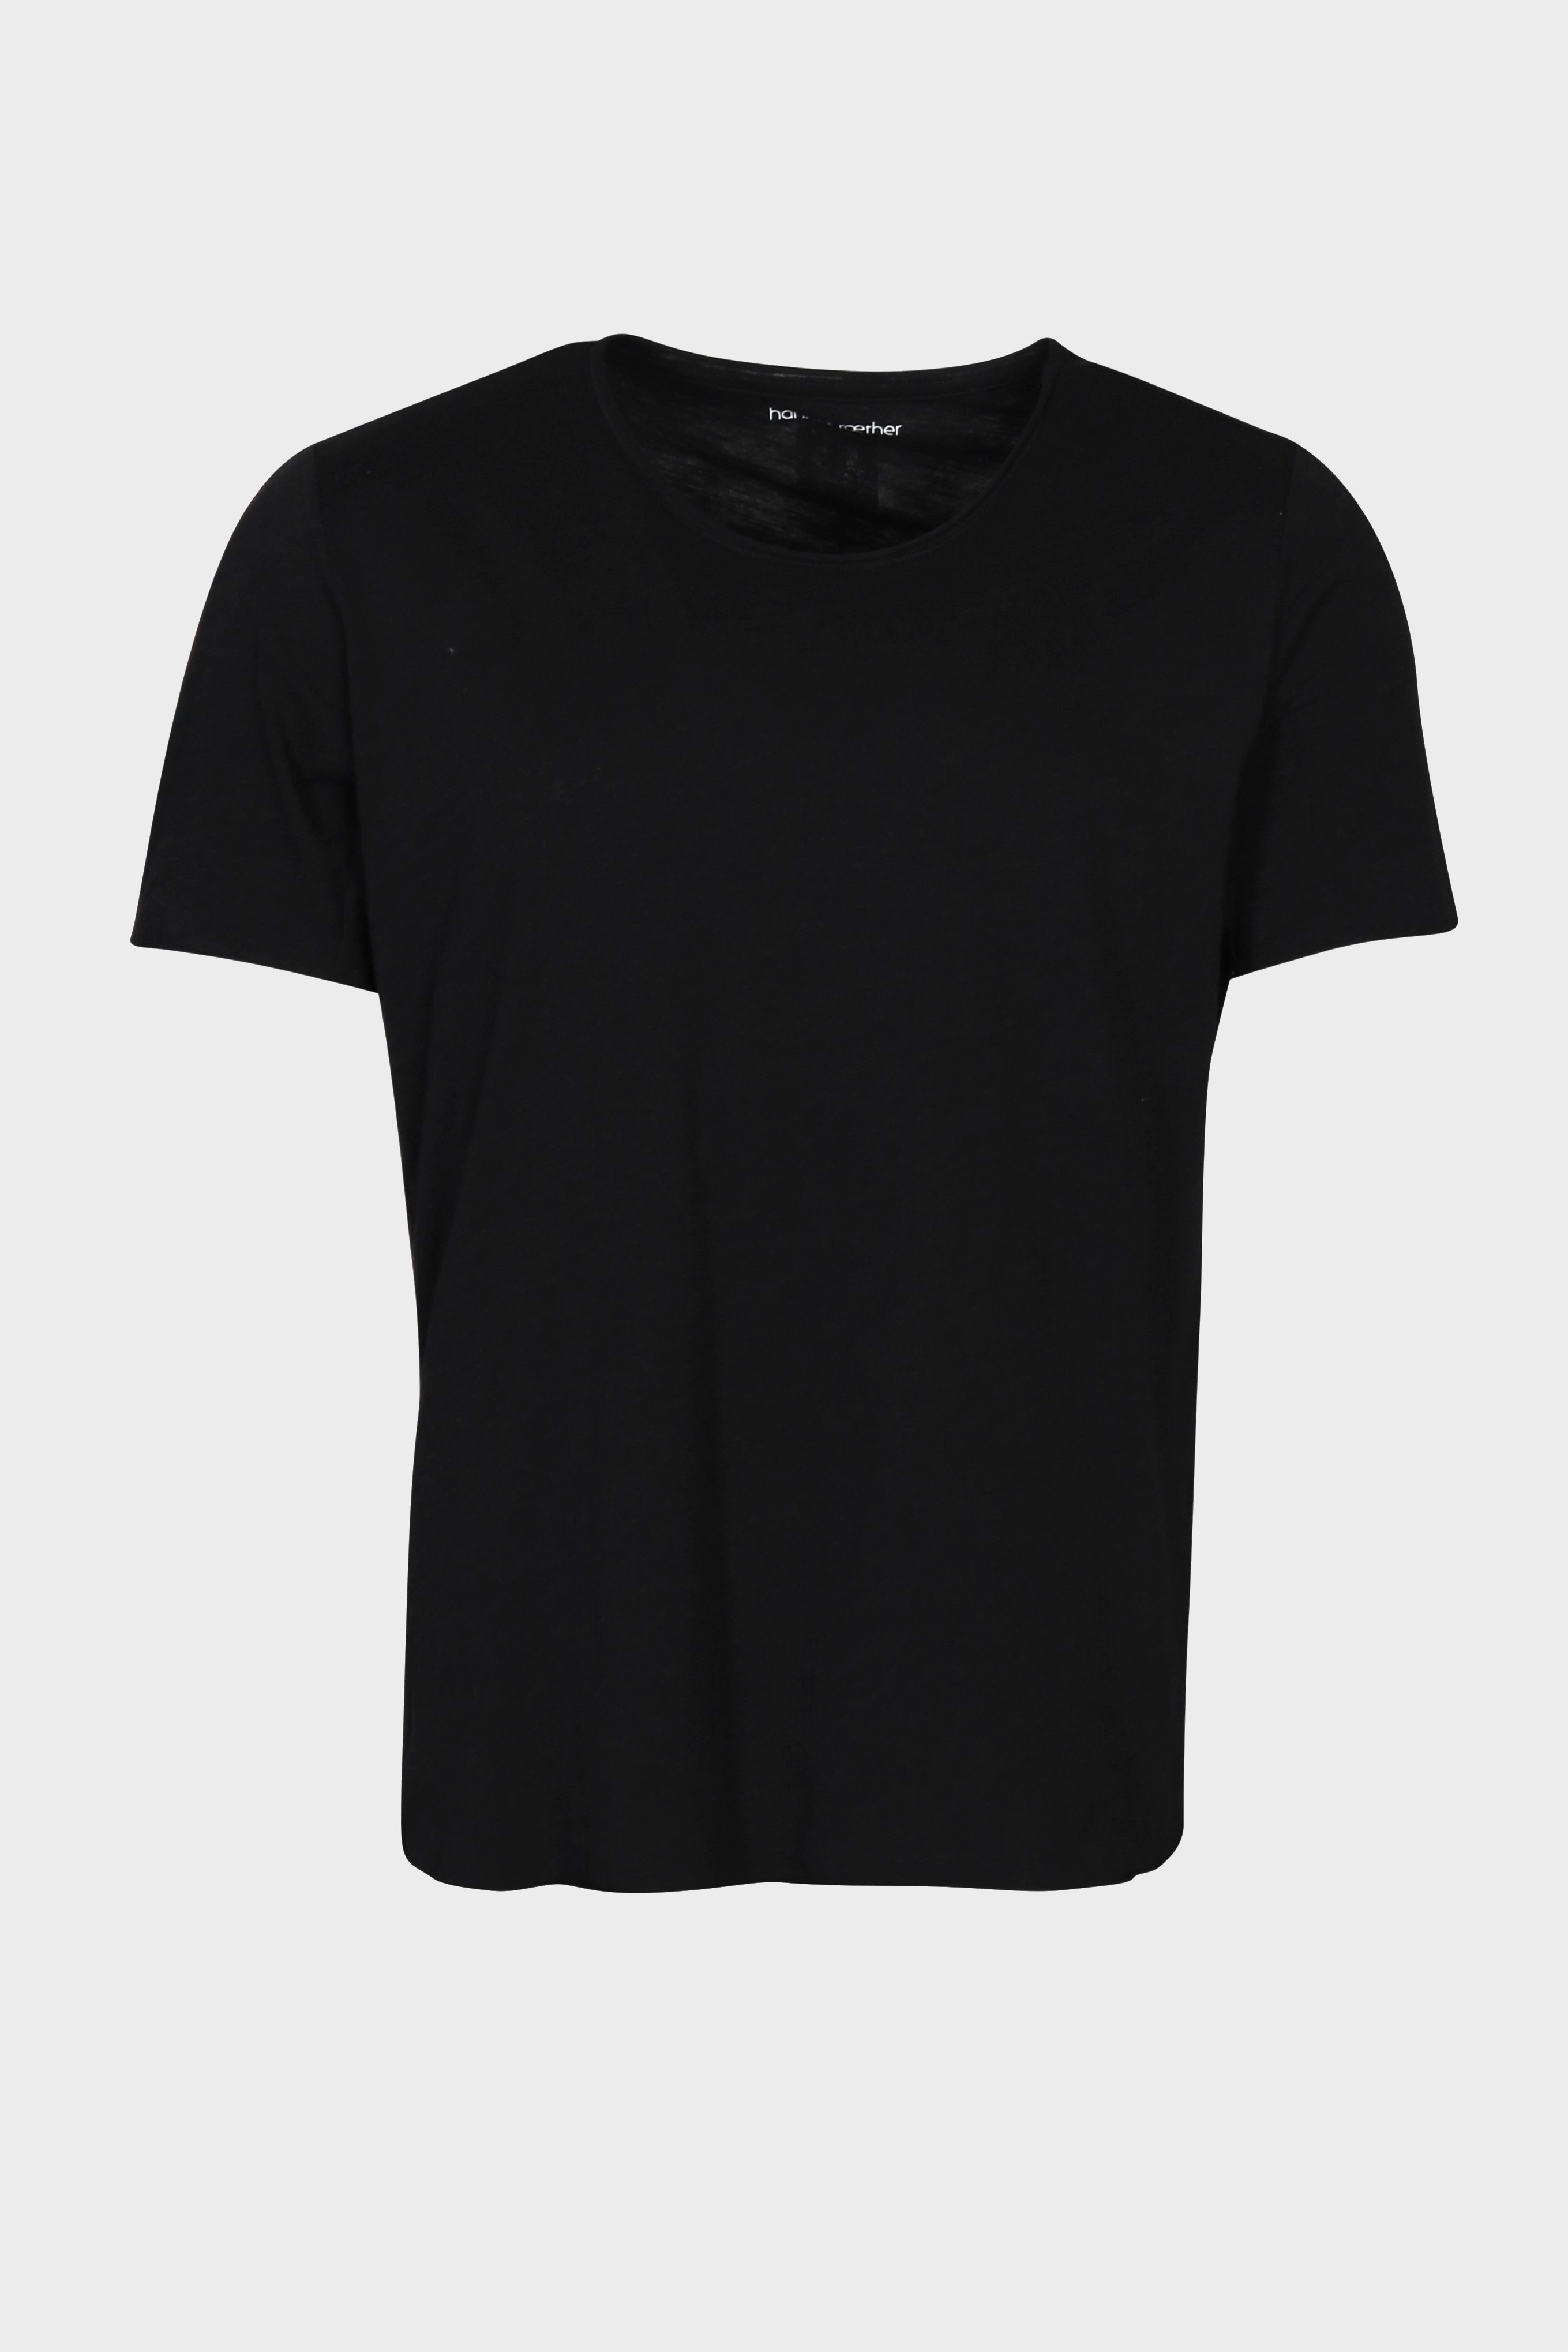 HANNES ROETHER Slub Yersey T-Shirt in Black L